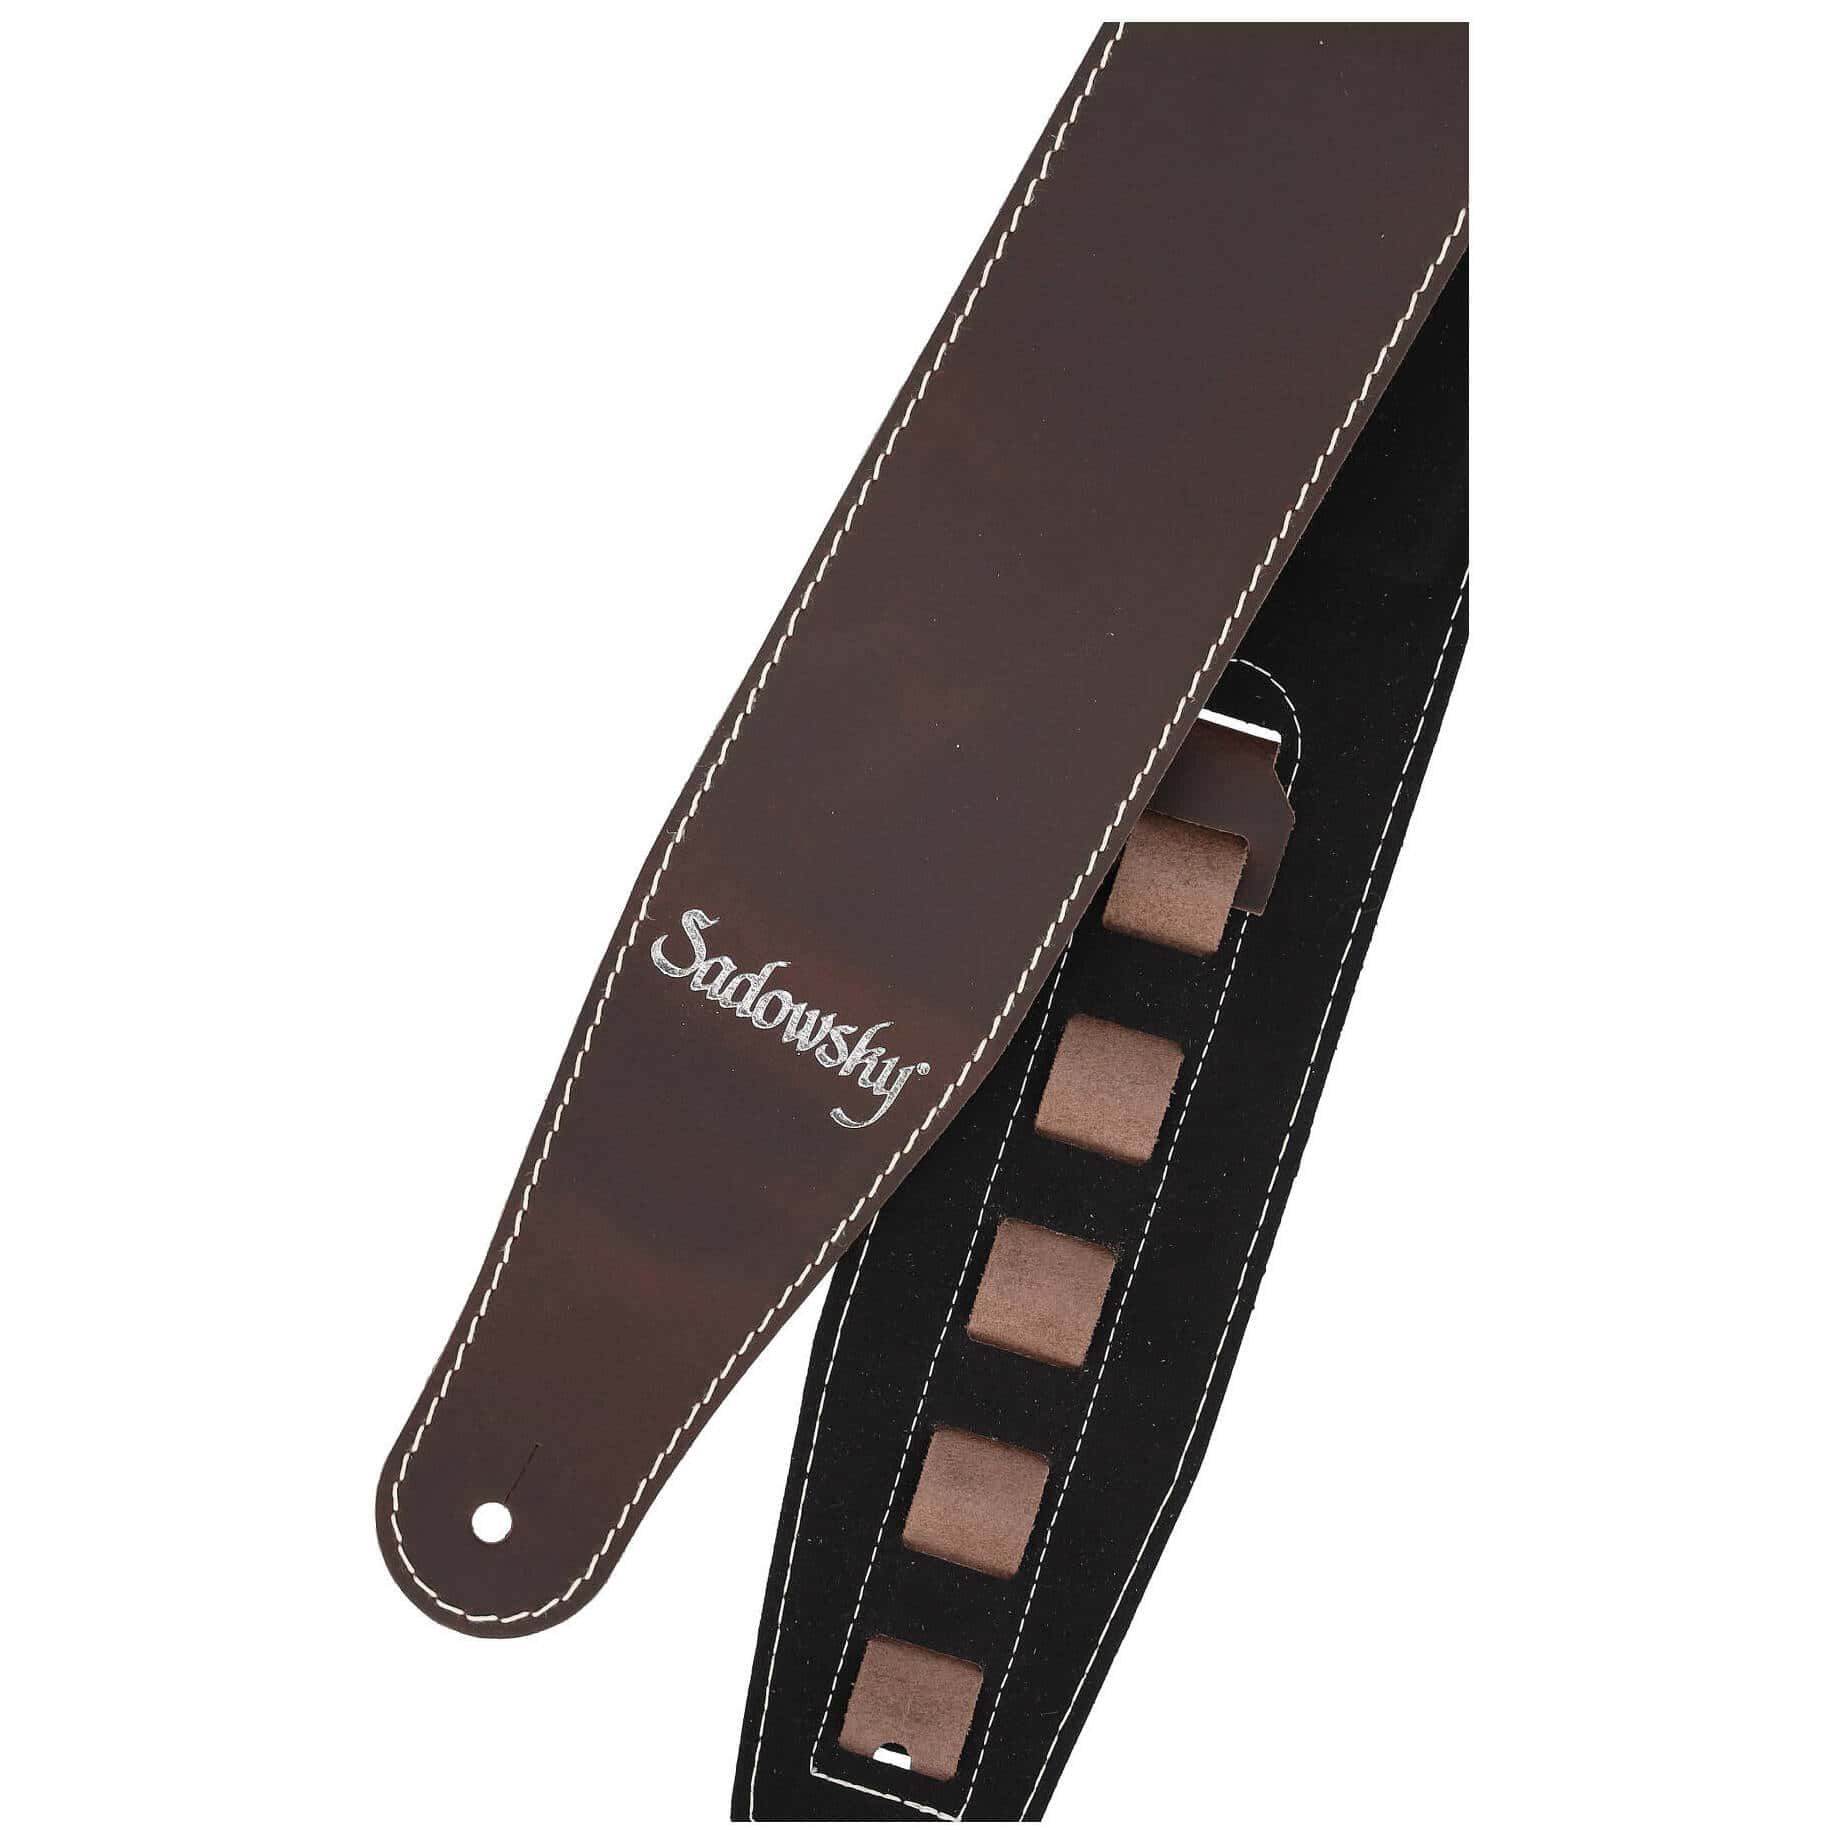 Sadowsky MetroLine Genuine Leather Bass Strap Brown, Silver 4